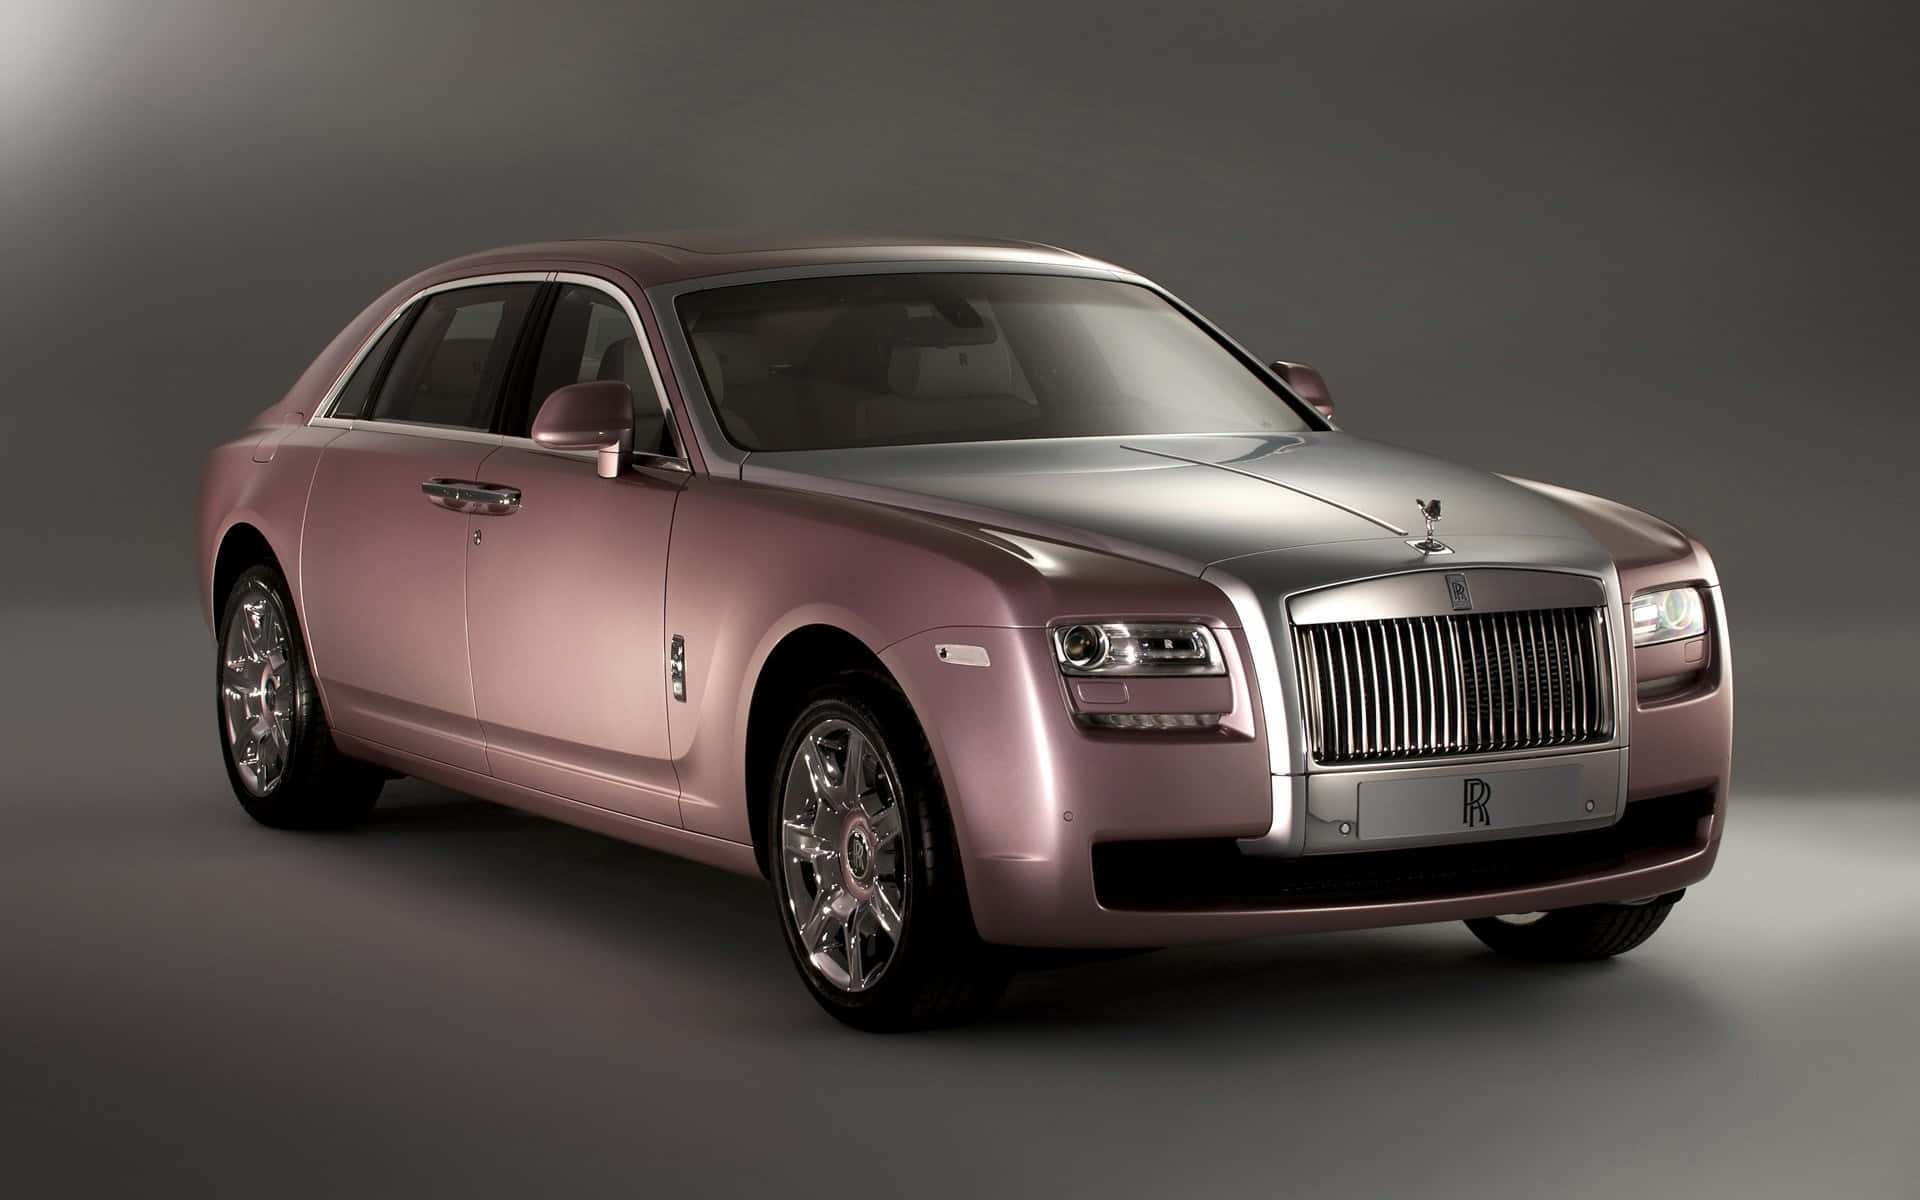 Luxurious Rolls Royce on urban streets